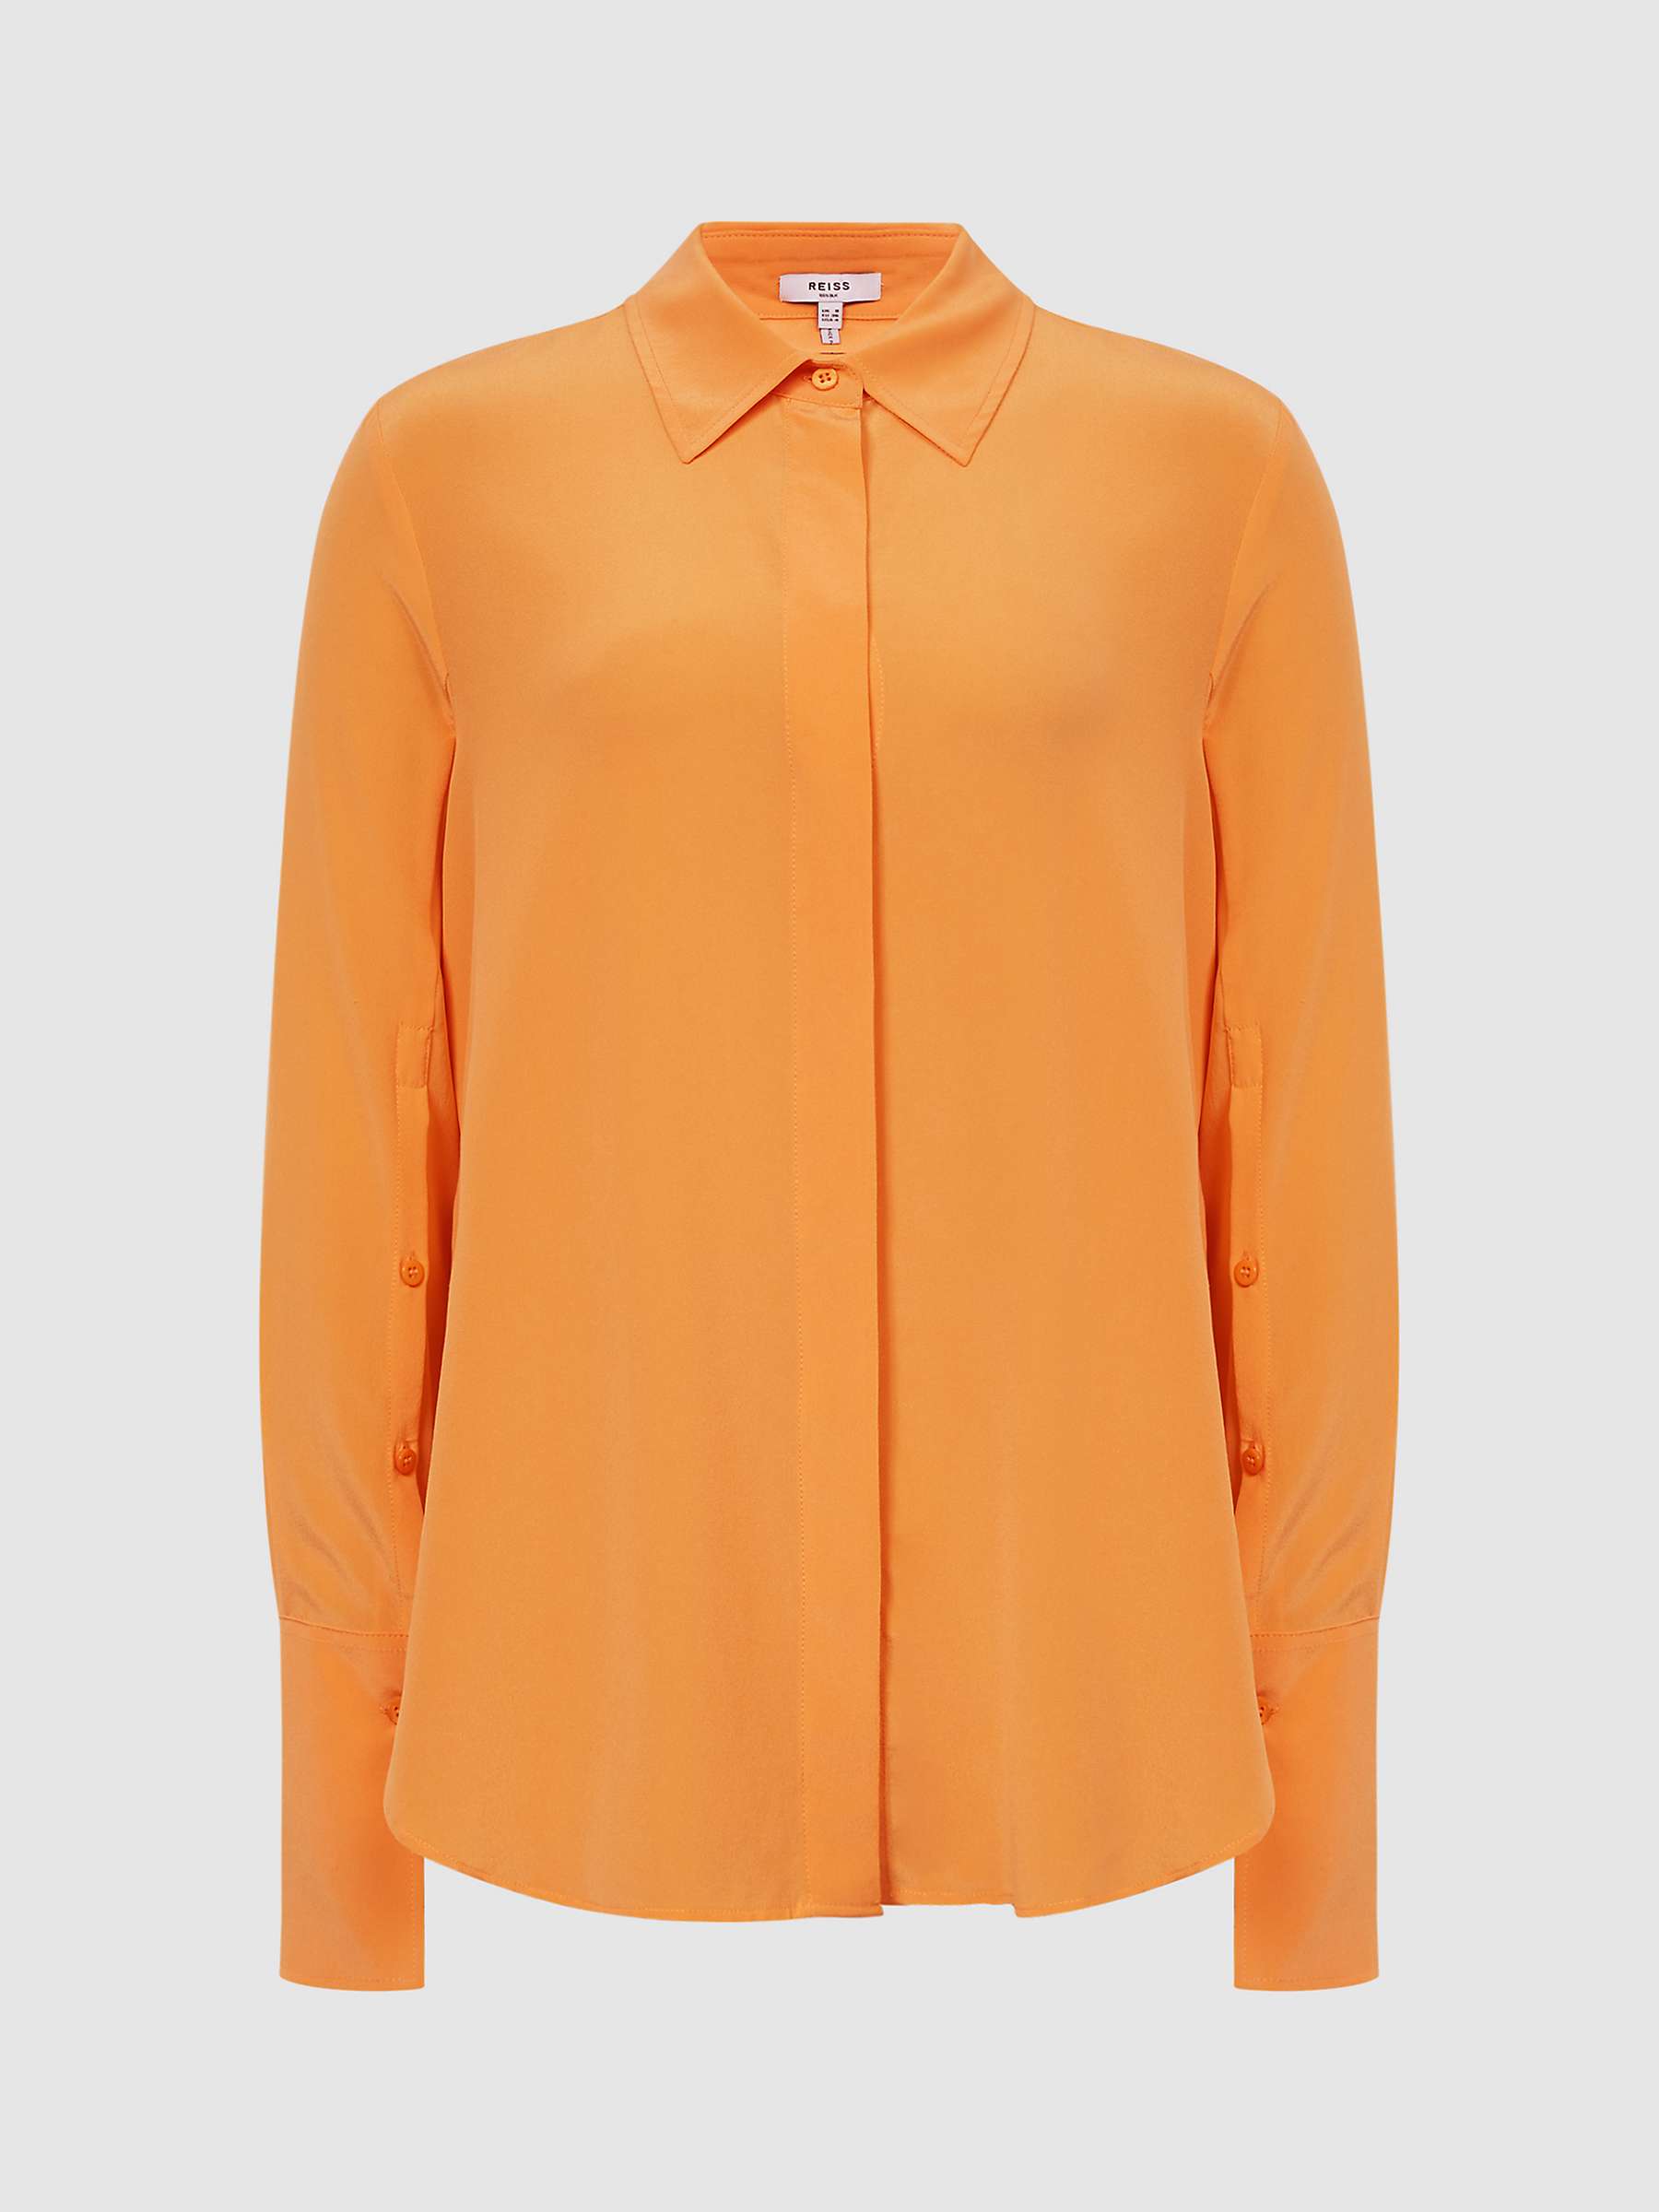 Reiss Kia Silk Shirt, Orange at John Lewis & Partners